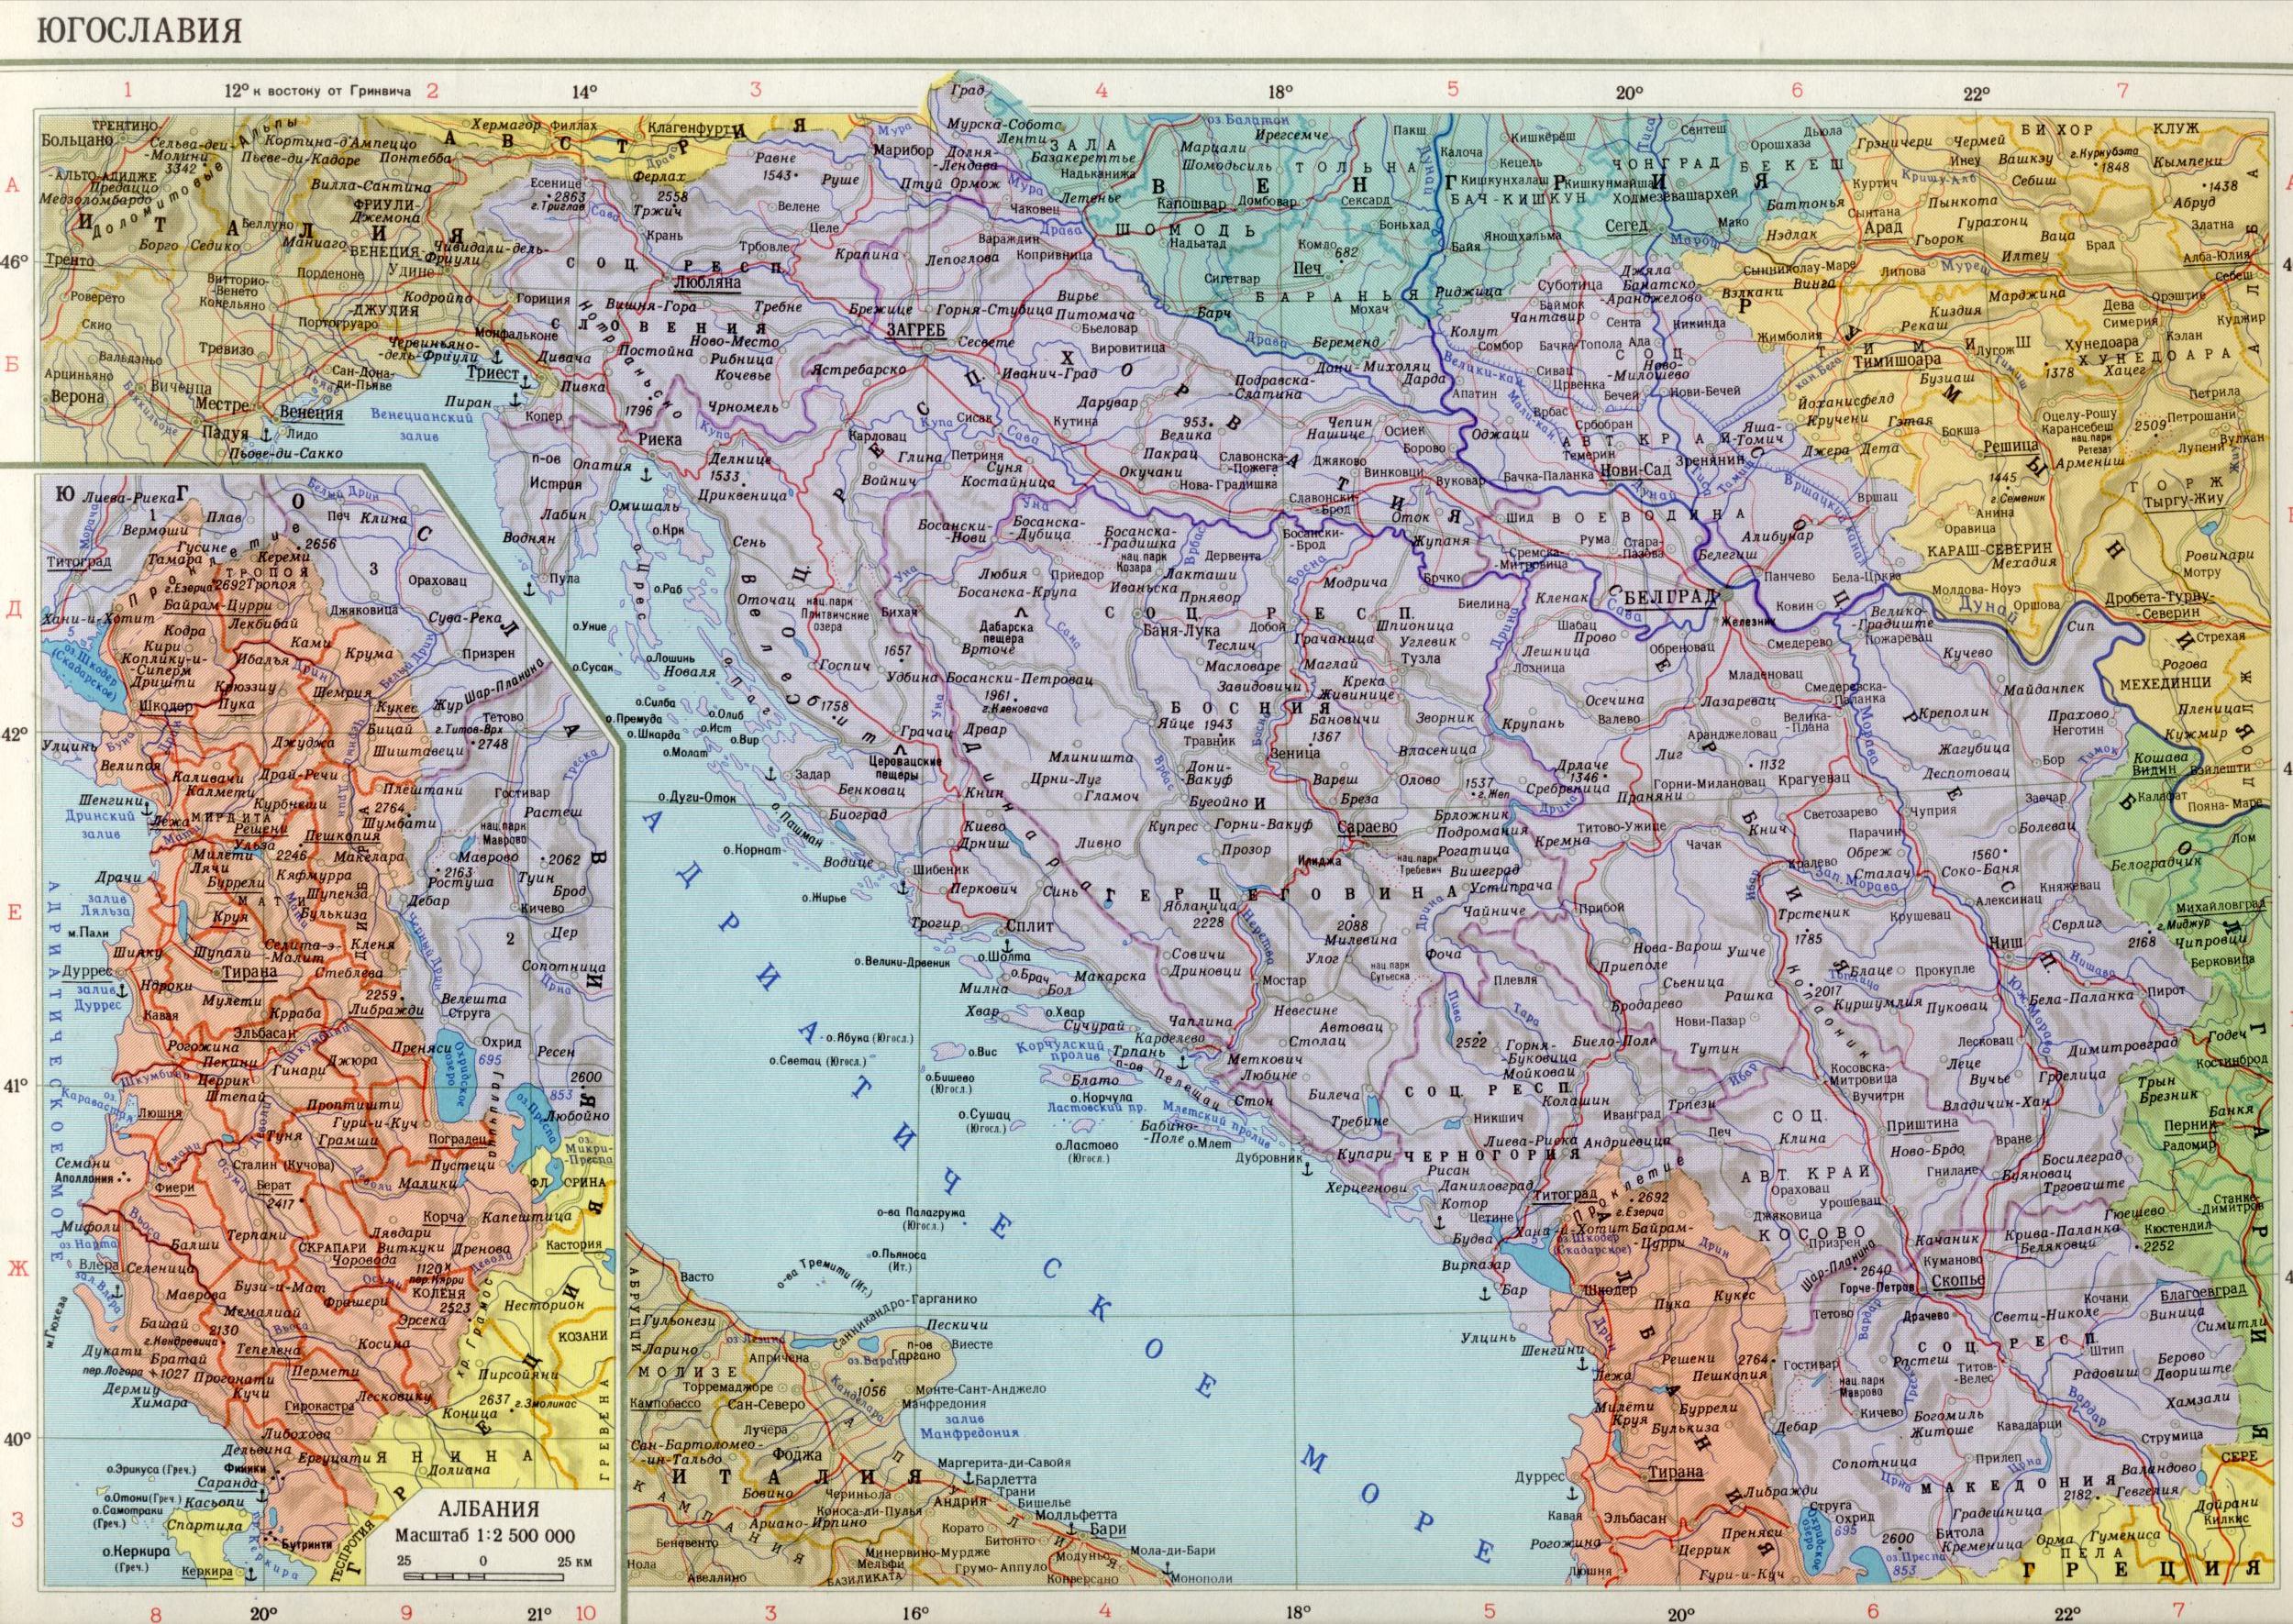 Jugoslawien Karte 1988 1cm = 13,5km. Freie politische Landkarte Europas